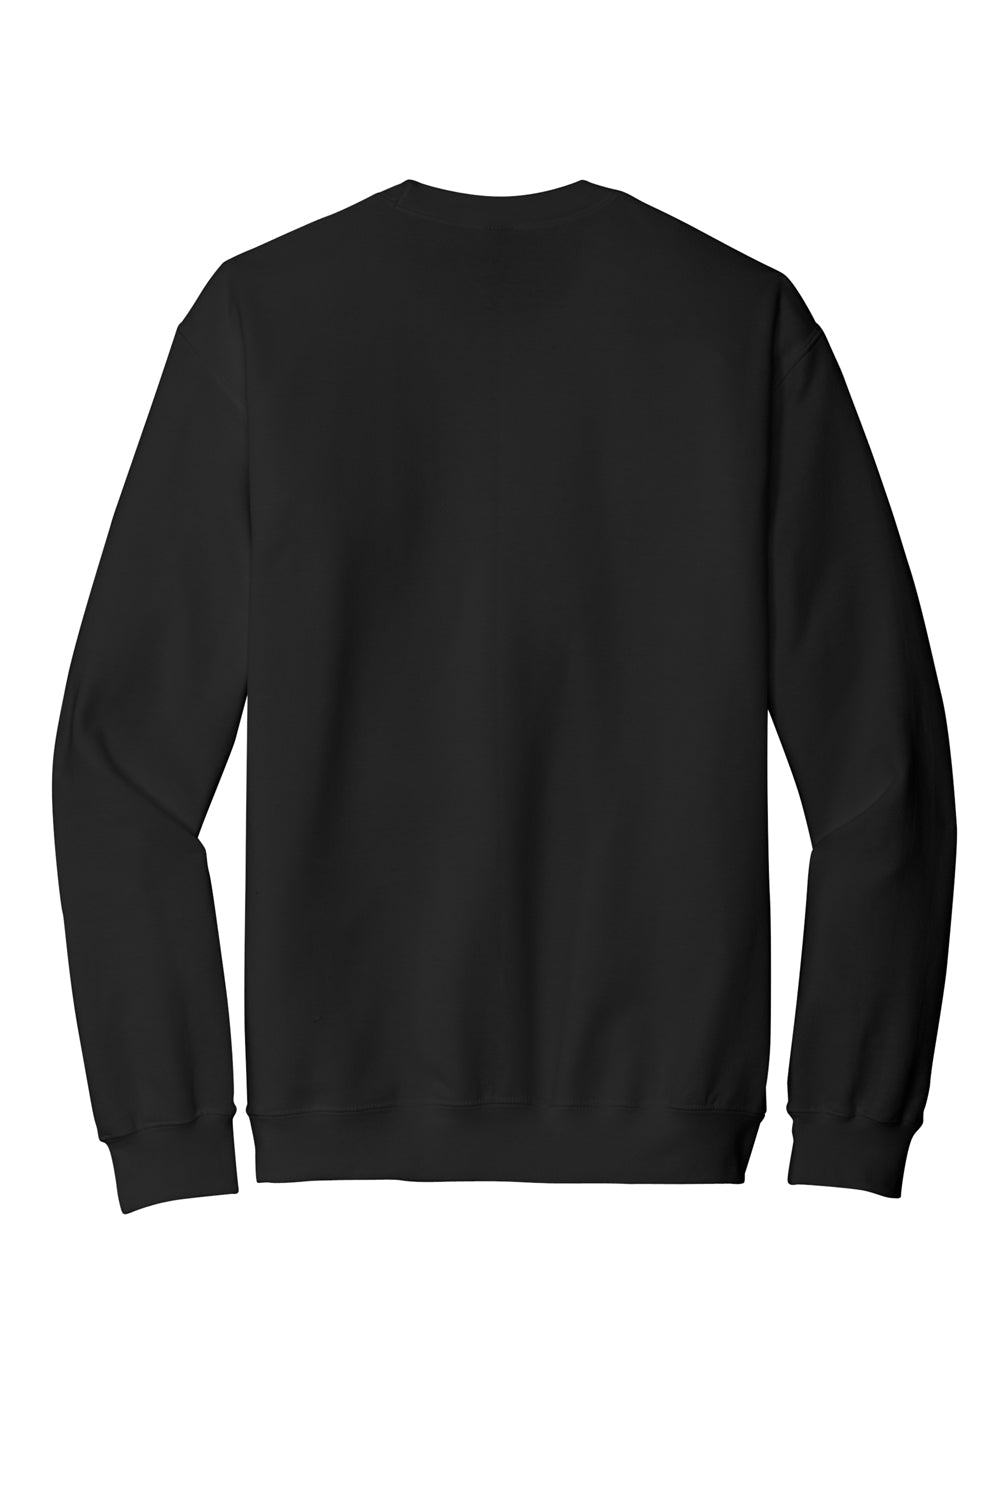 Gildan SF000 Softstyle Crewneck Sweatshirt Black Flat Back